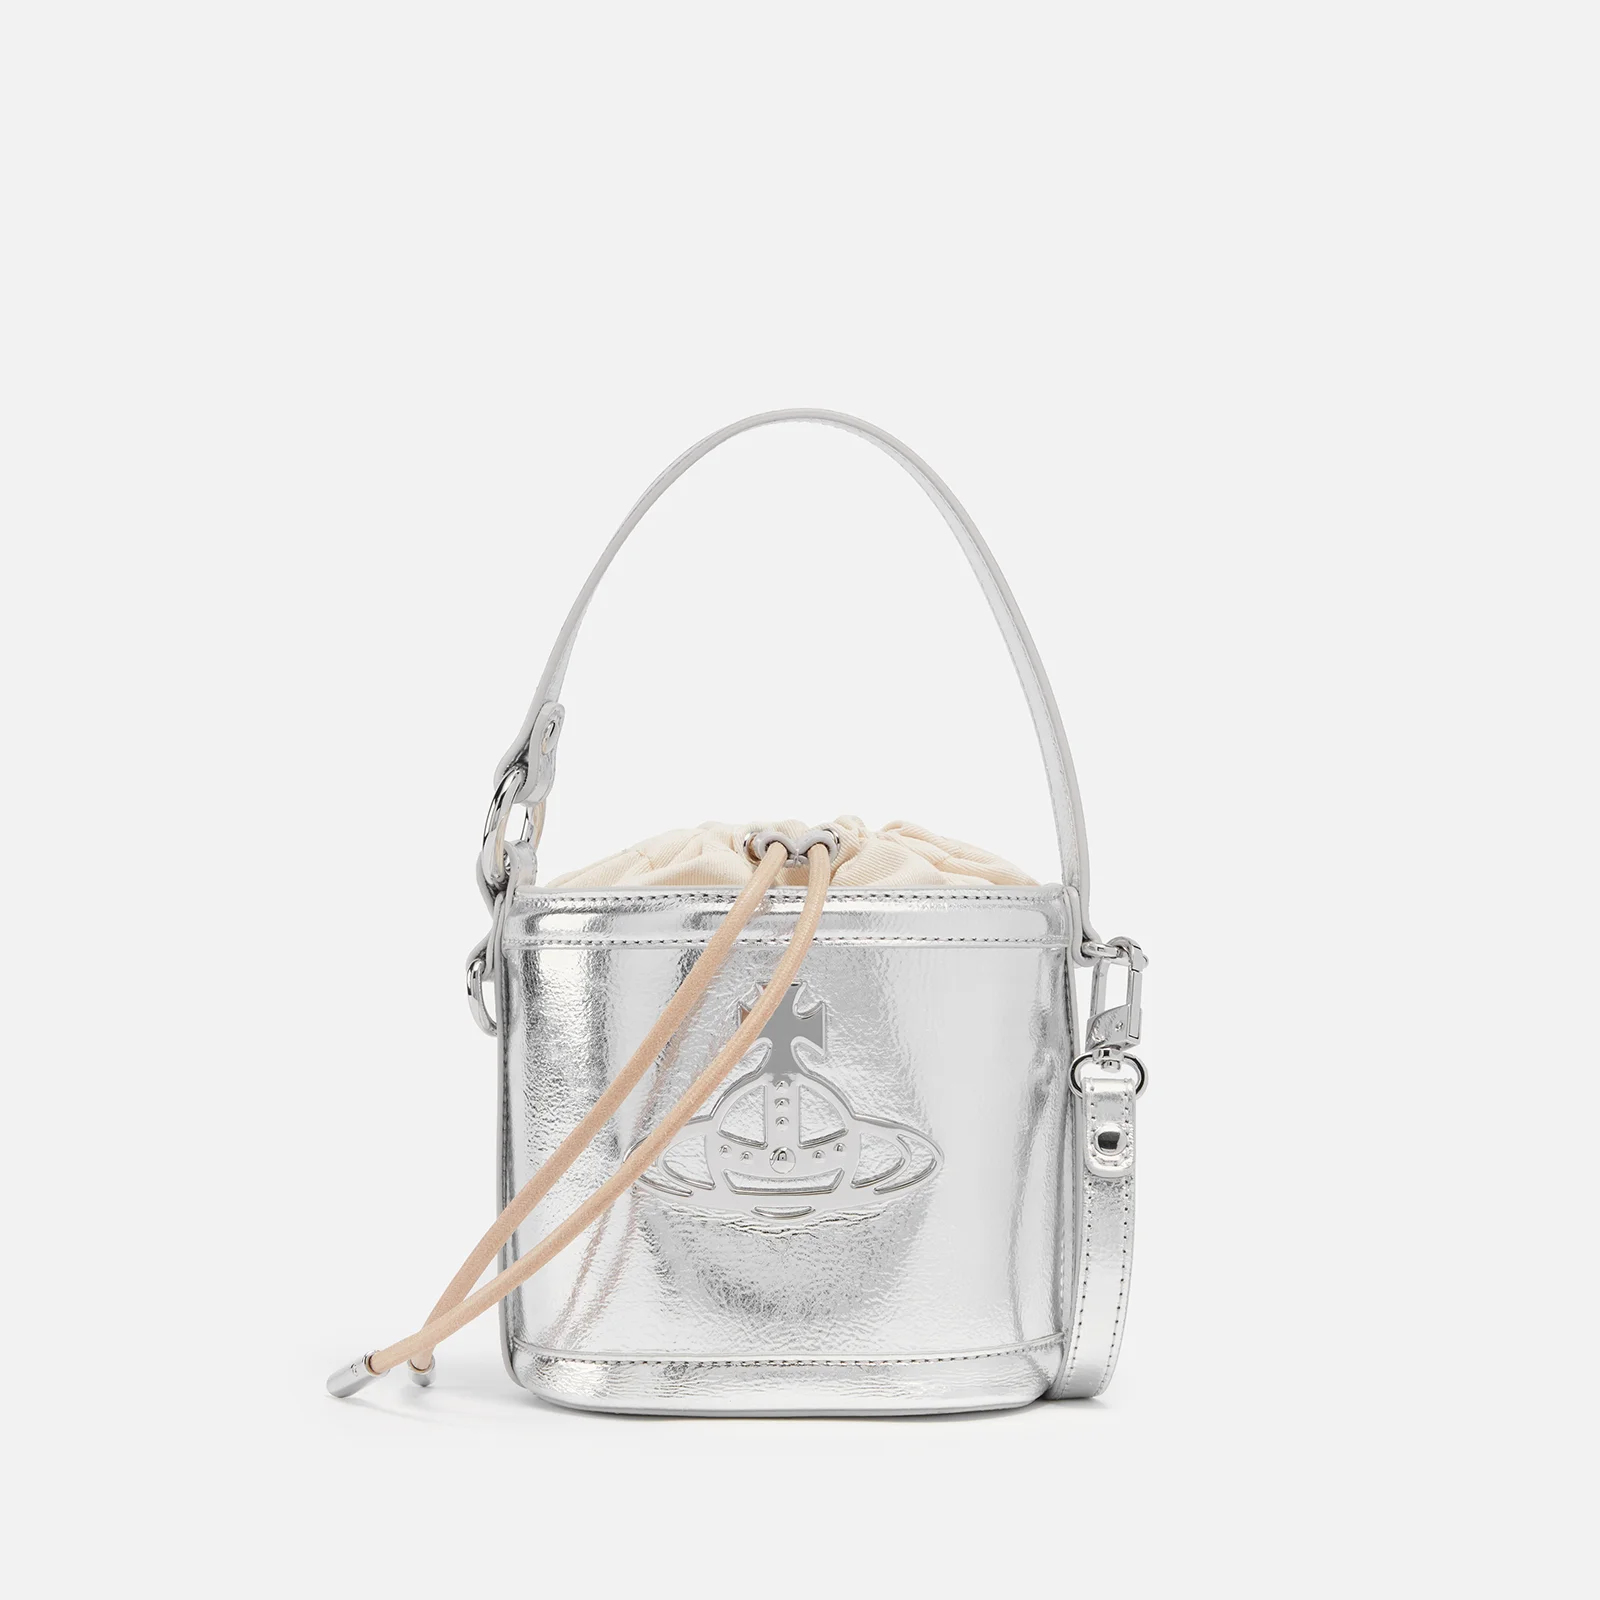 Vivienne Westwood Daisy Patent Leather Bucket Bag Image 1